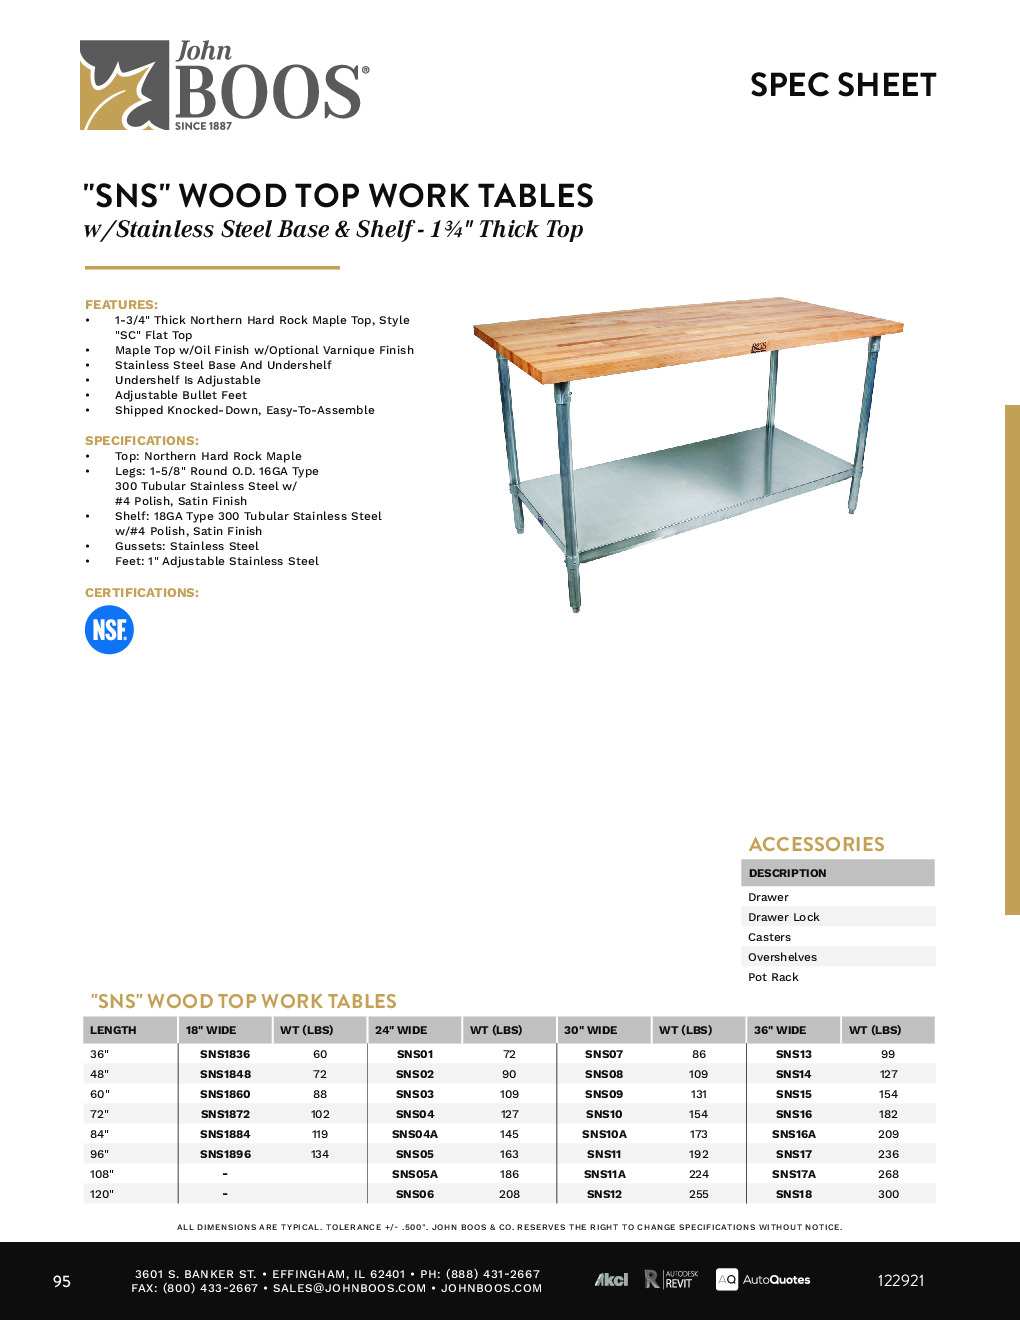 John Boos SNS05-X Wood Top Work Table